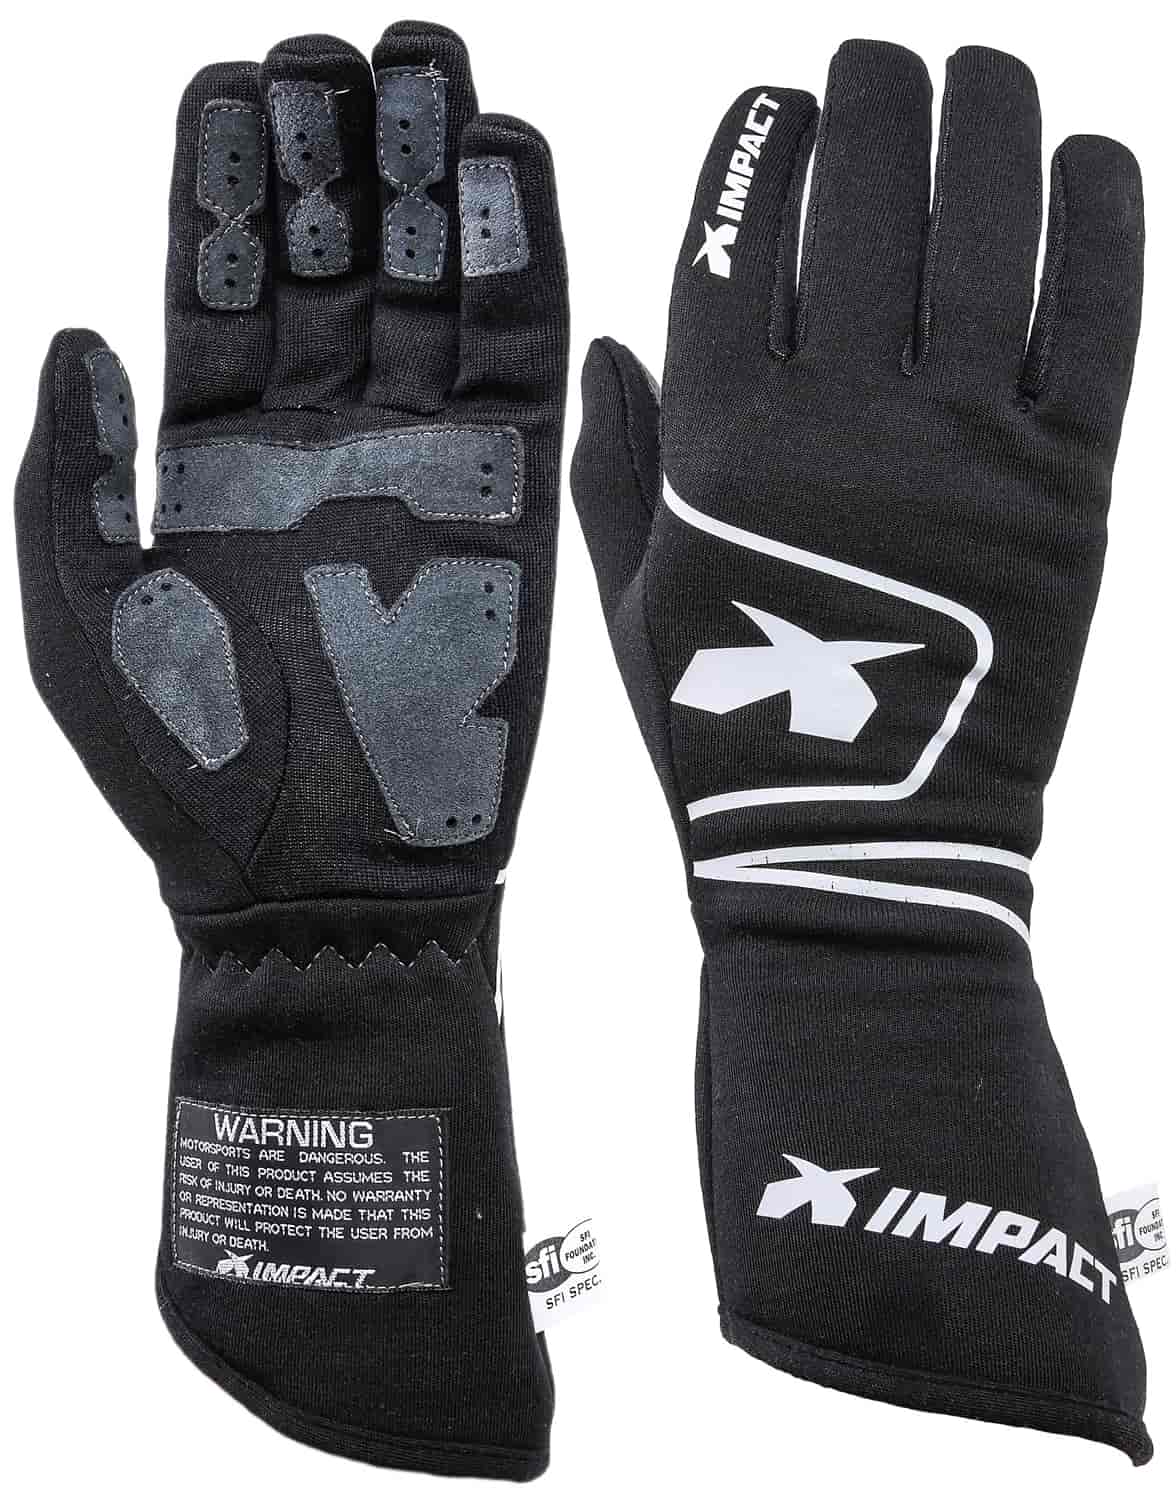 G6 Driving Gloves X-Large Black SFI-5